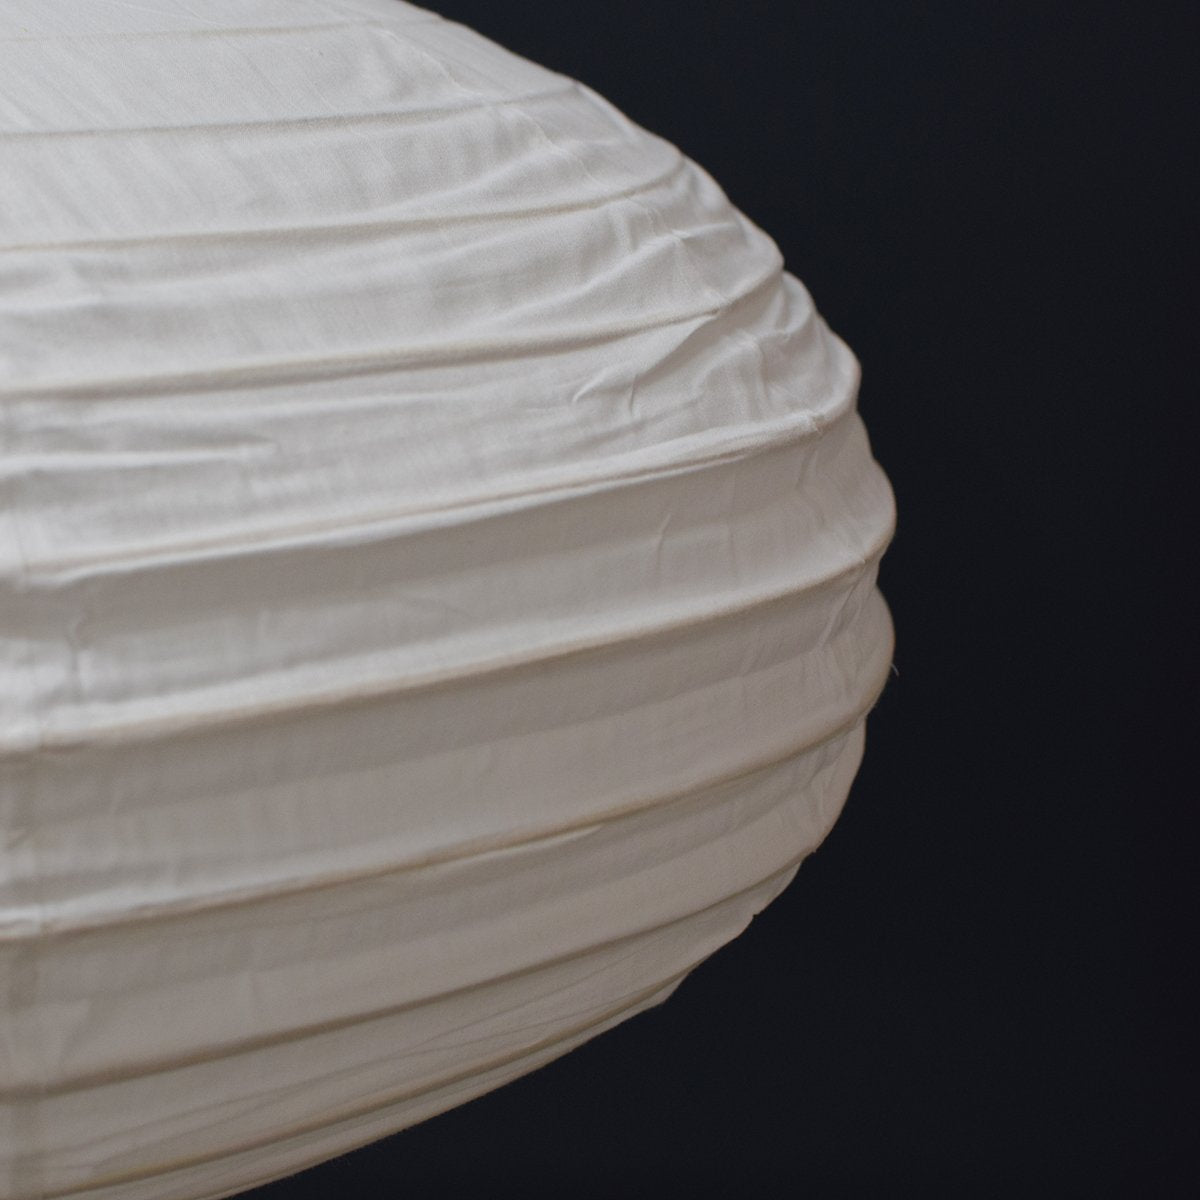 Cotton Oval Lantern Shade 60cm Full White - Mrs Robinson